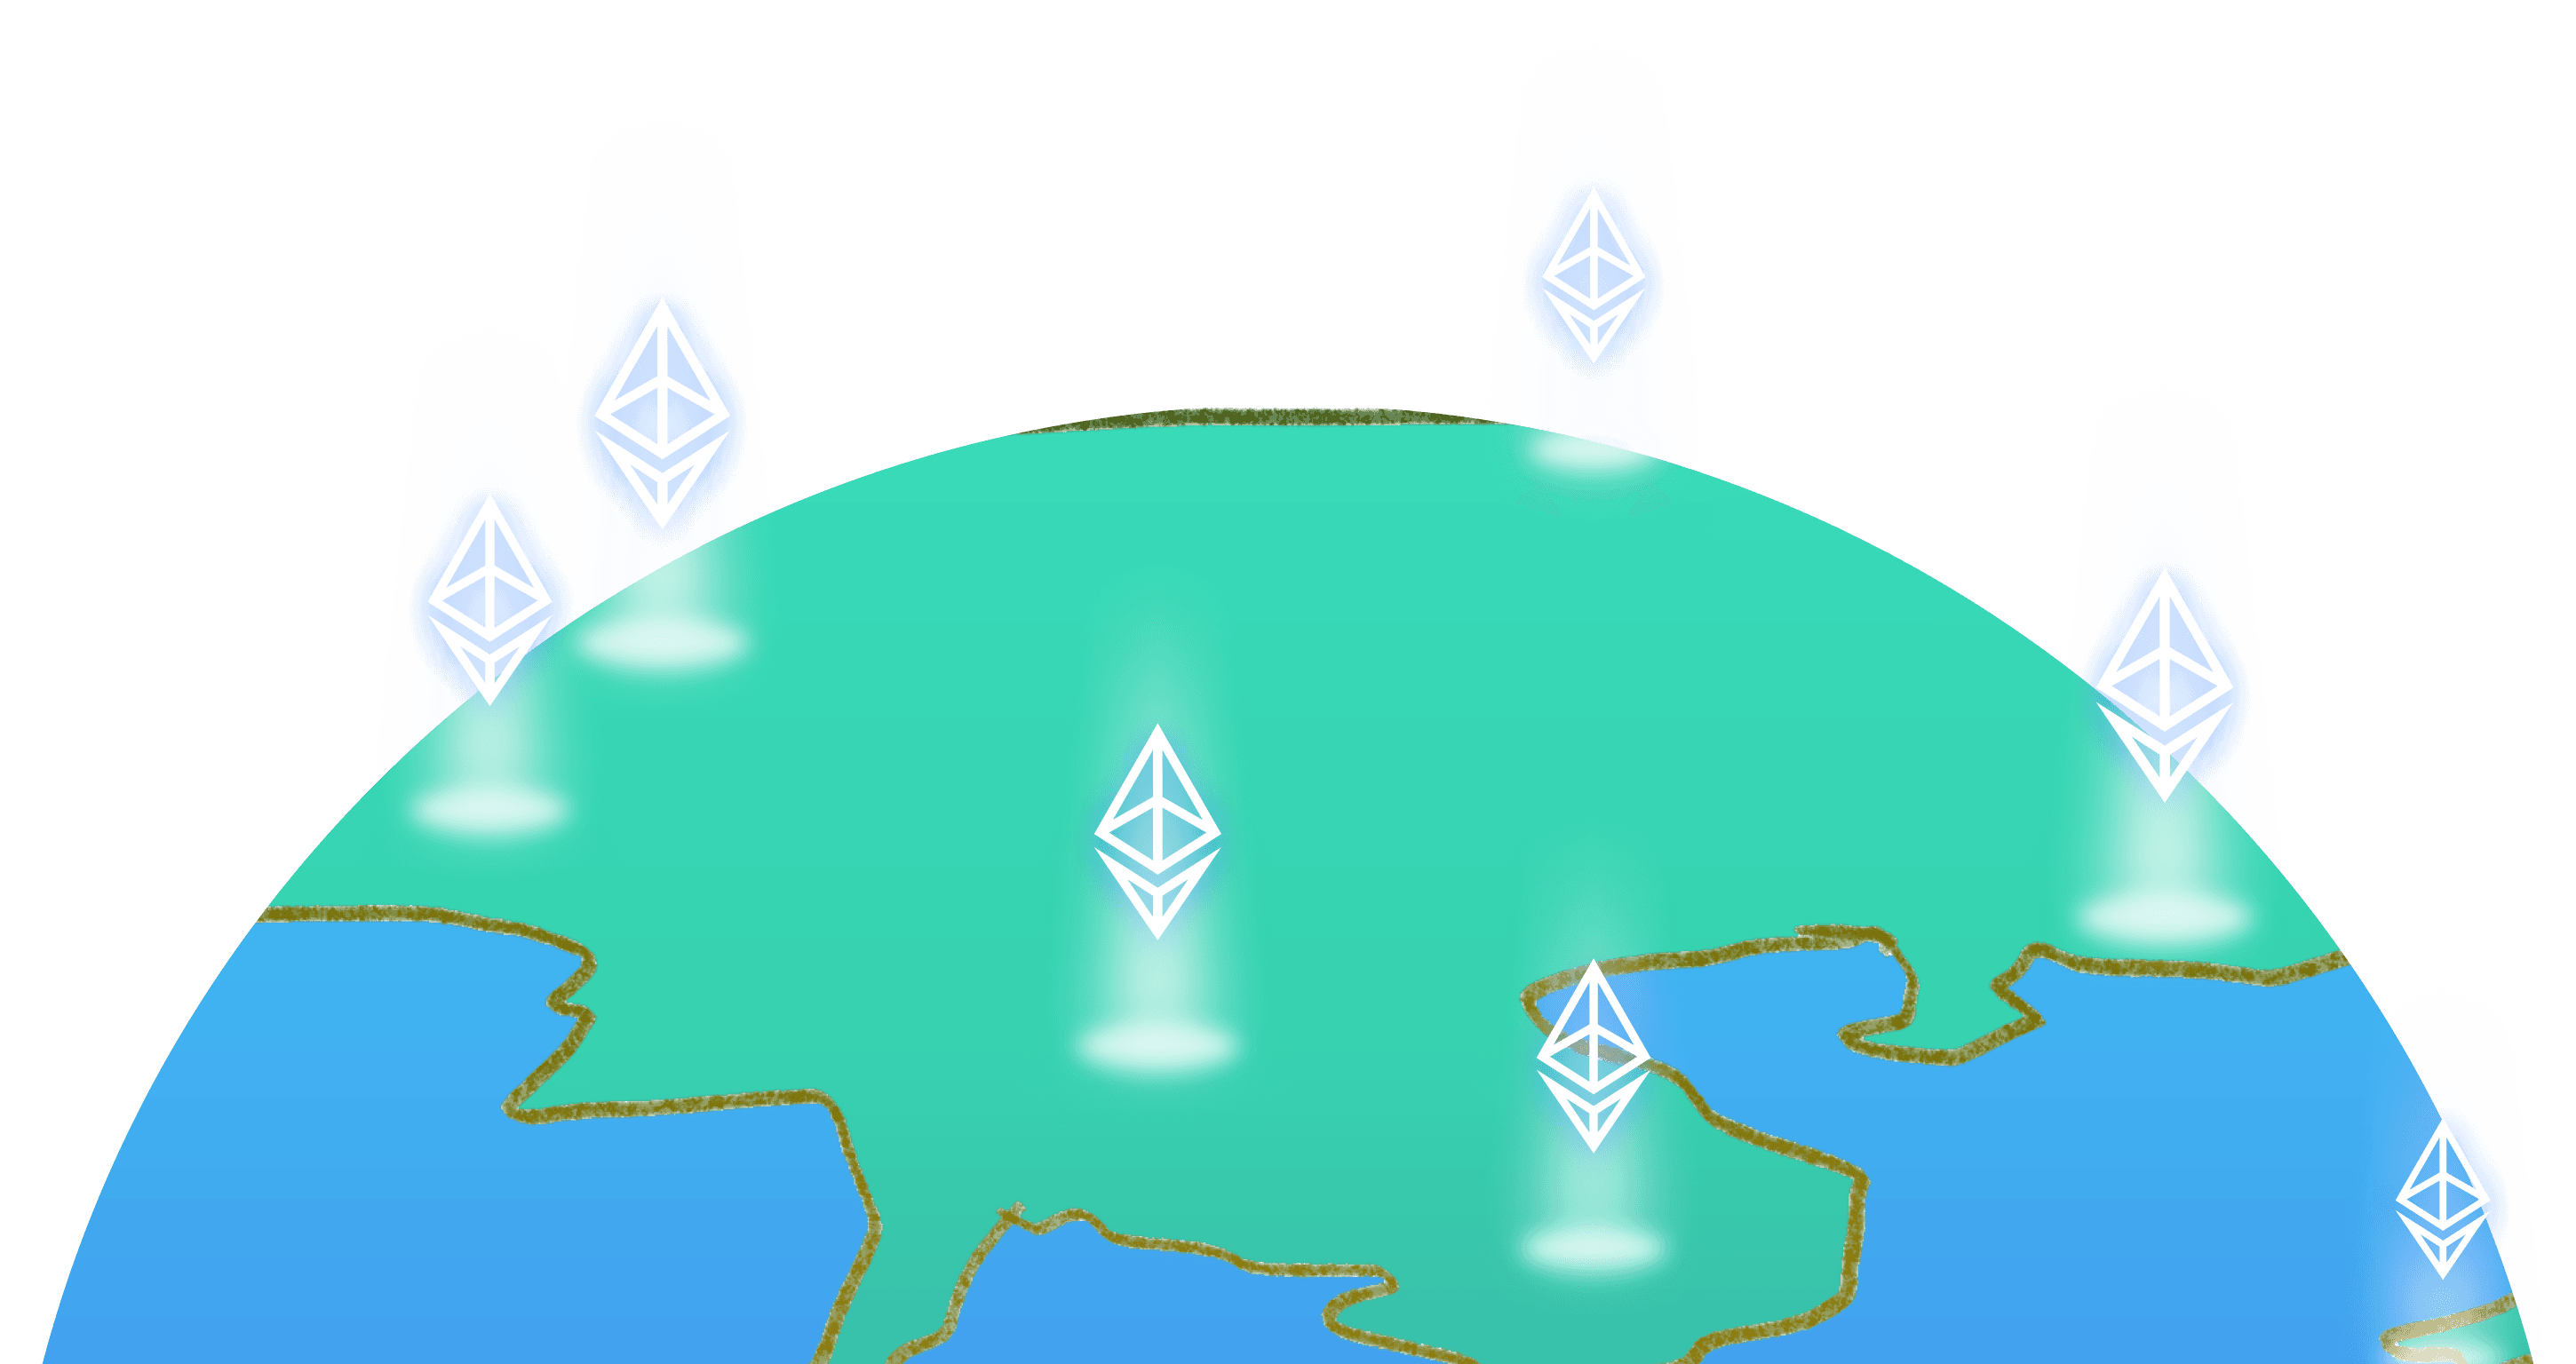 Globe with Ethereum logos